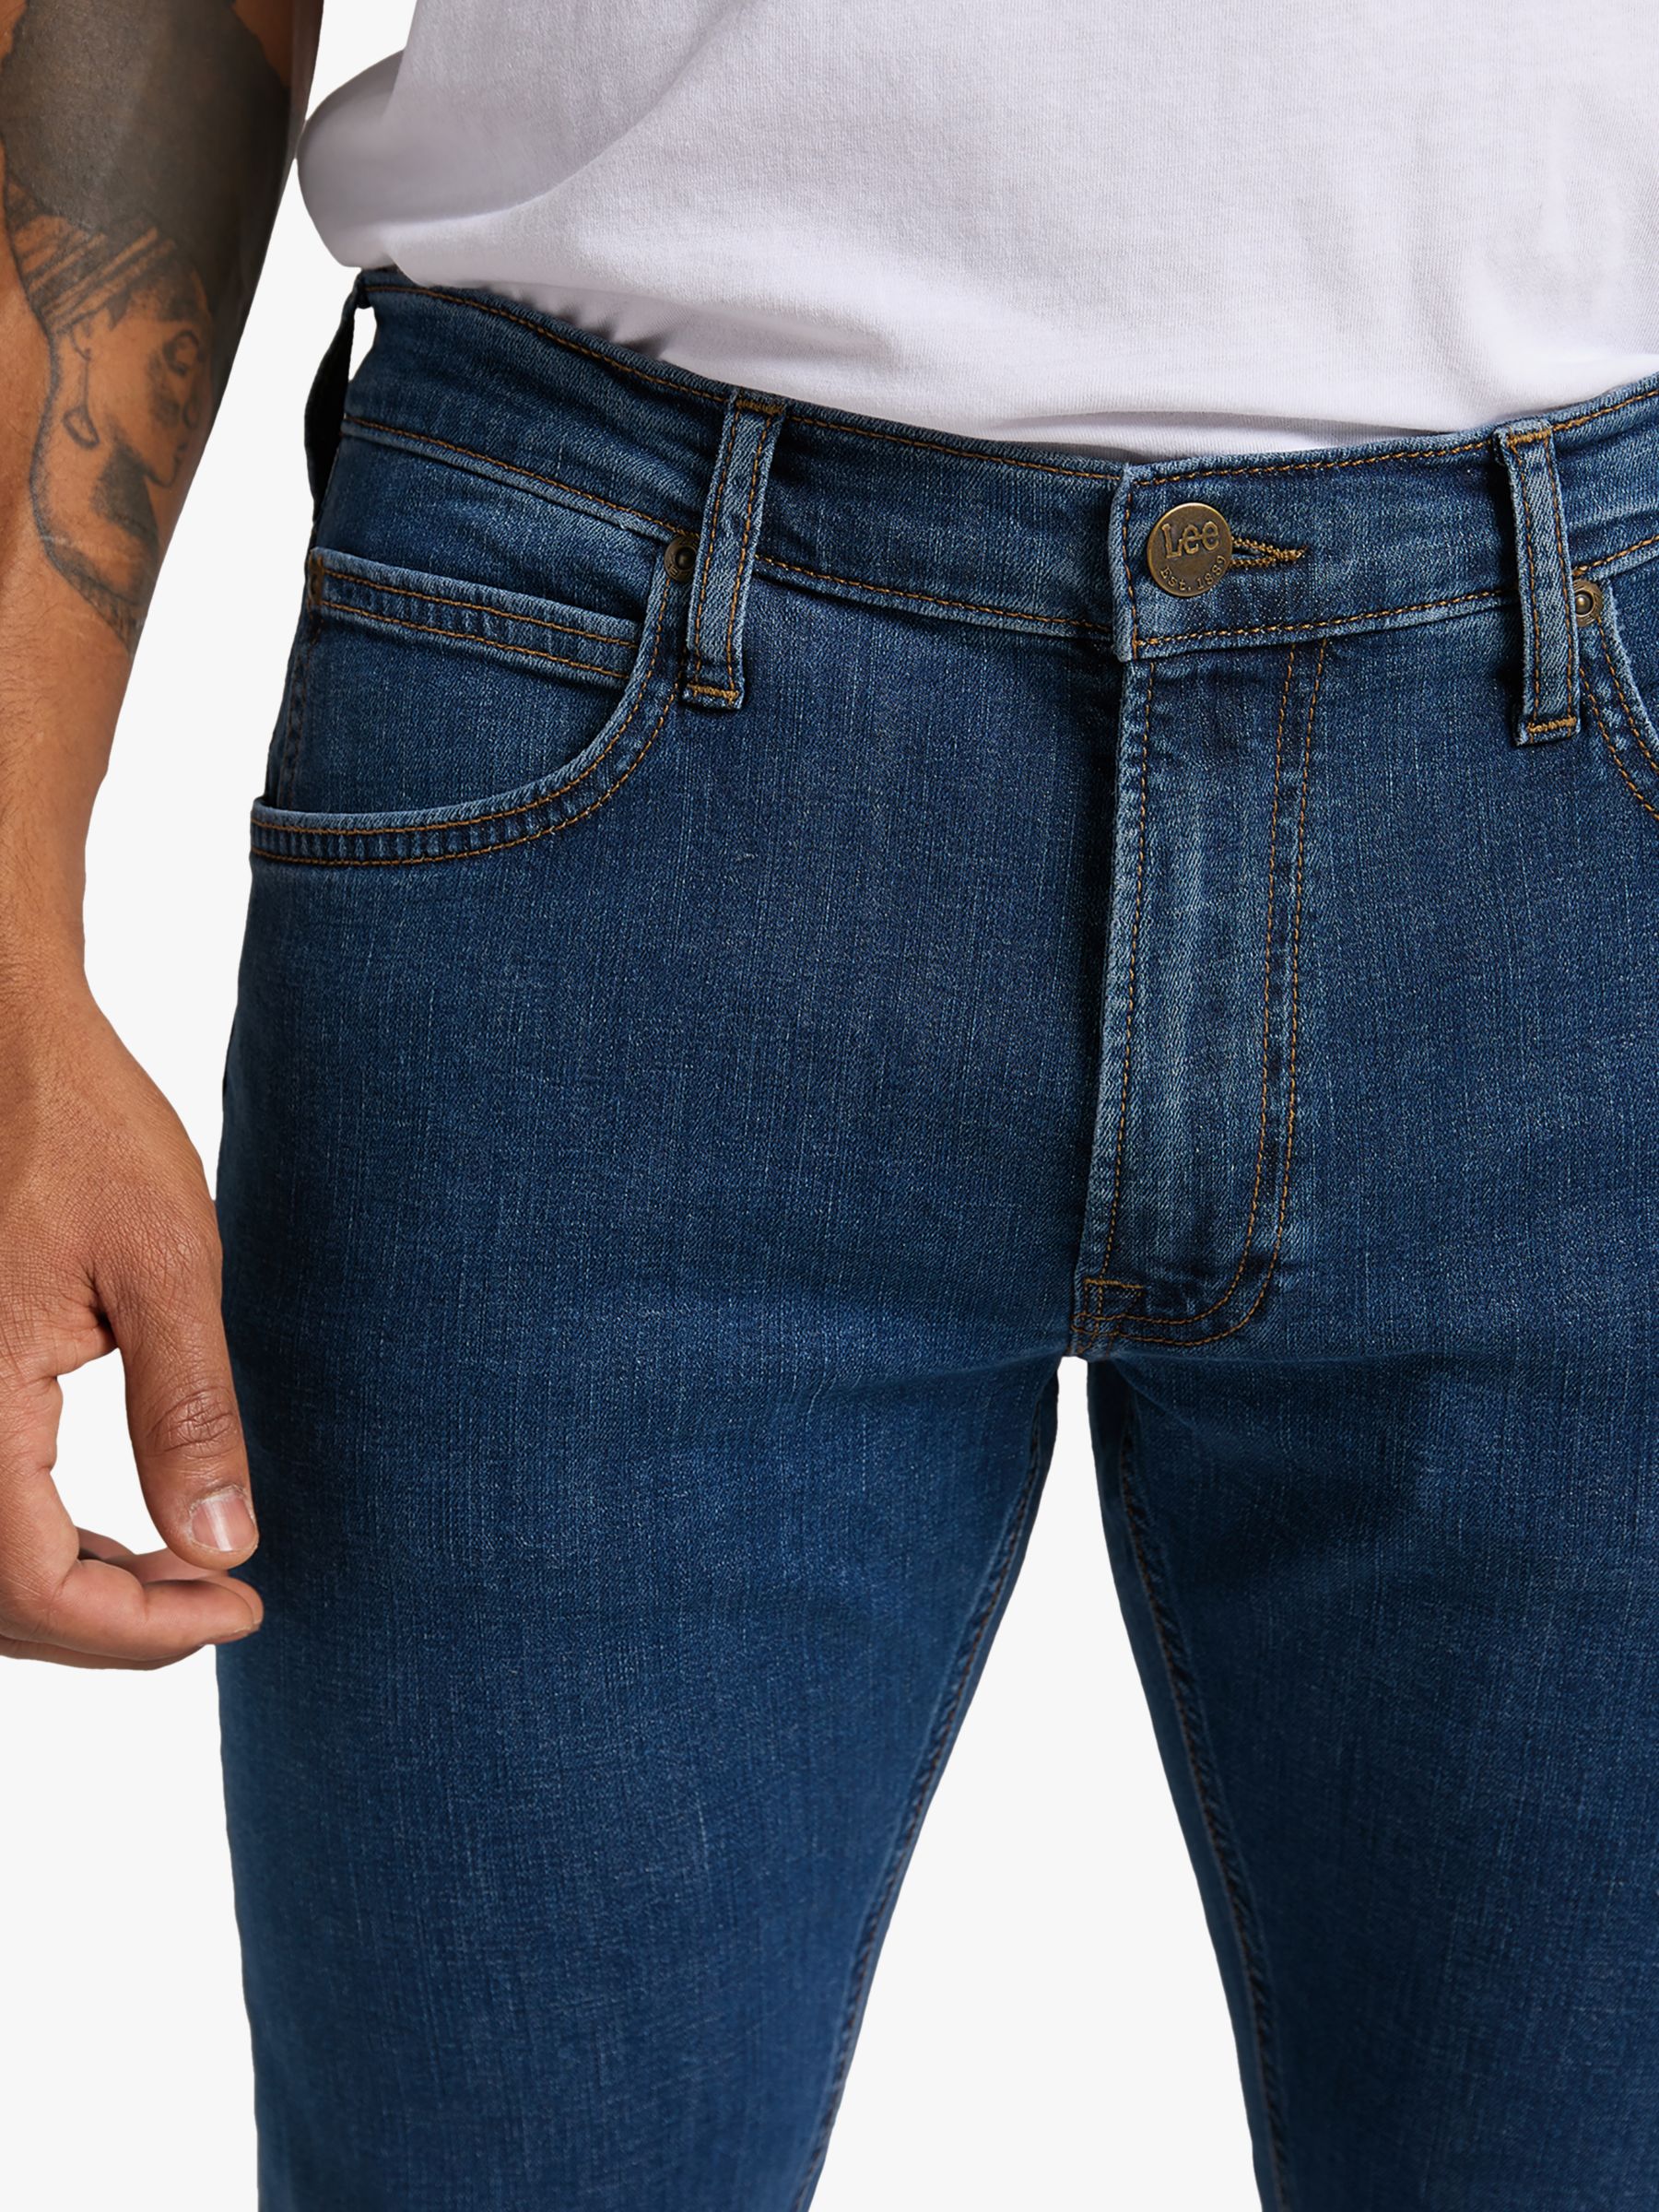 Lee Luke Stone Wash Slim Fit Jeans, Blue at John Lewis & Partners